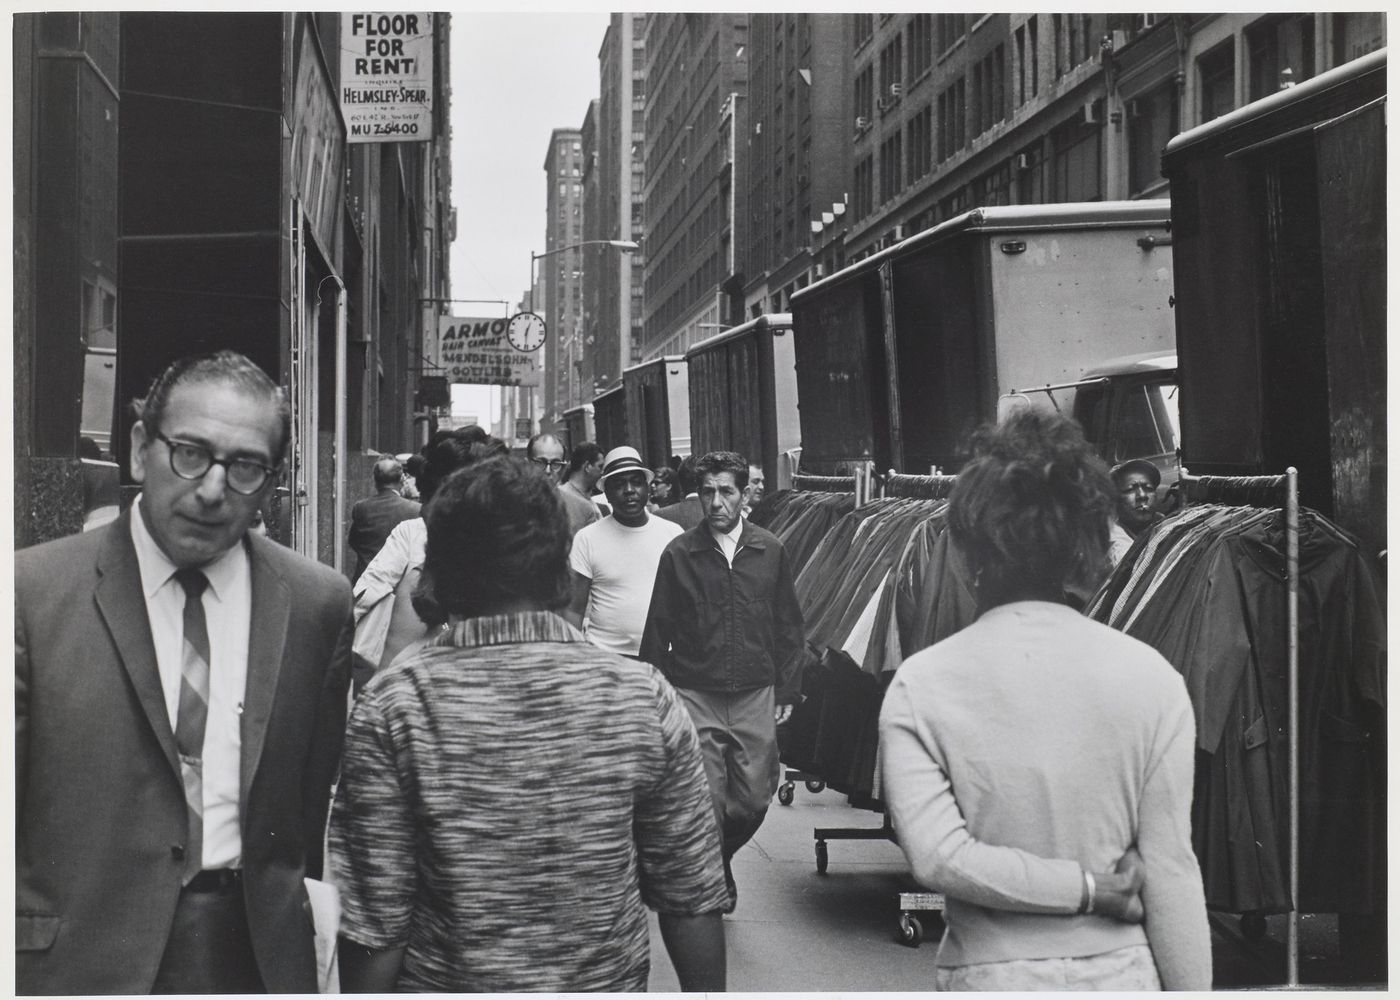 Group portrait of pedestrians showing rolling garment racks, trucks and buildings, West 37th Street, Manhattan, New York City, New York